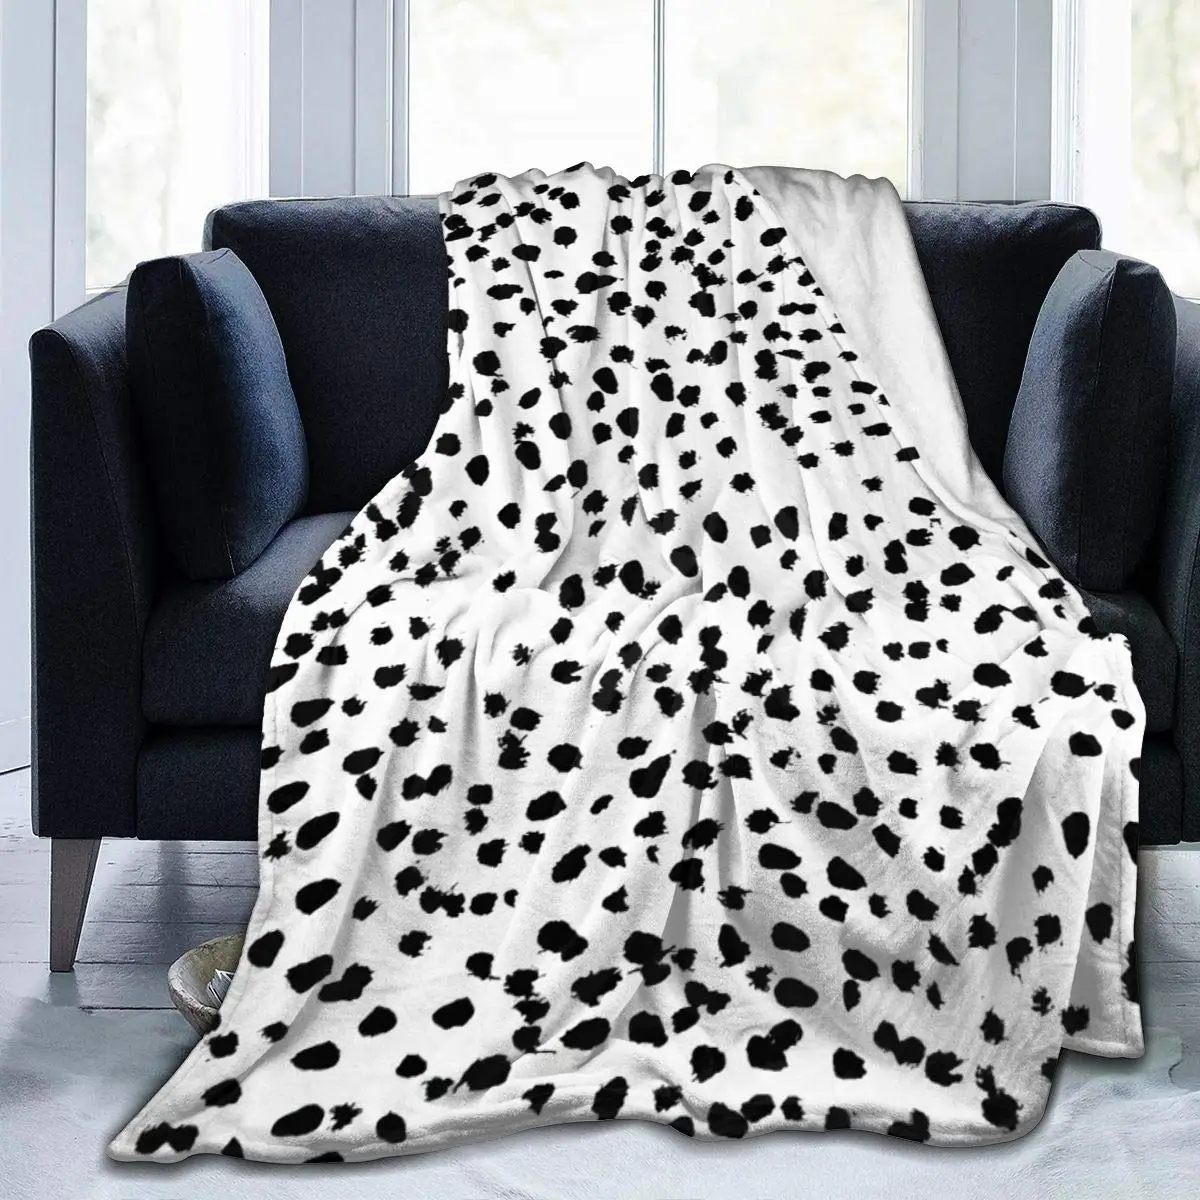 

Brown Cow Fur Print Blanket Soft Cow Skin Print Throw Blankets Fleece Pattern Blanket for couch Farm Animal Blanket Blanket Cow